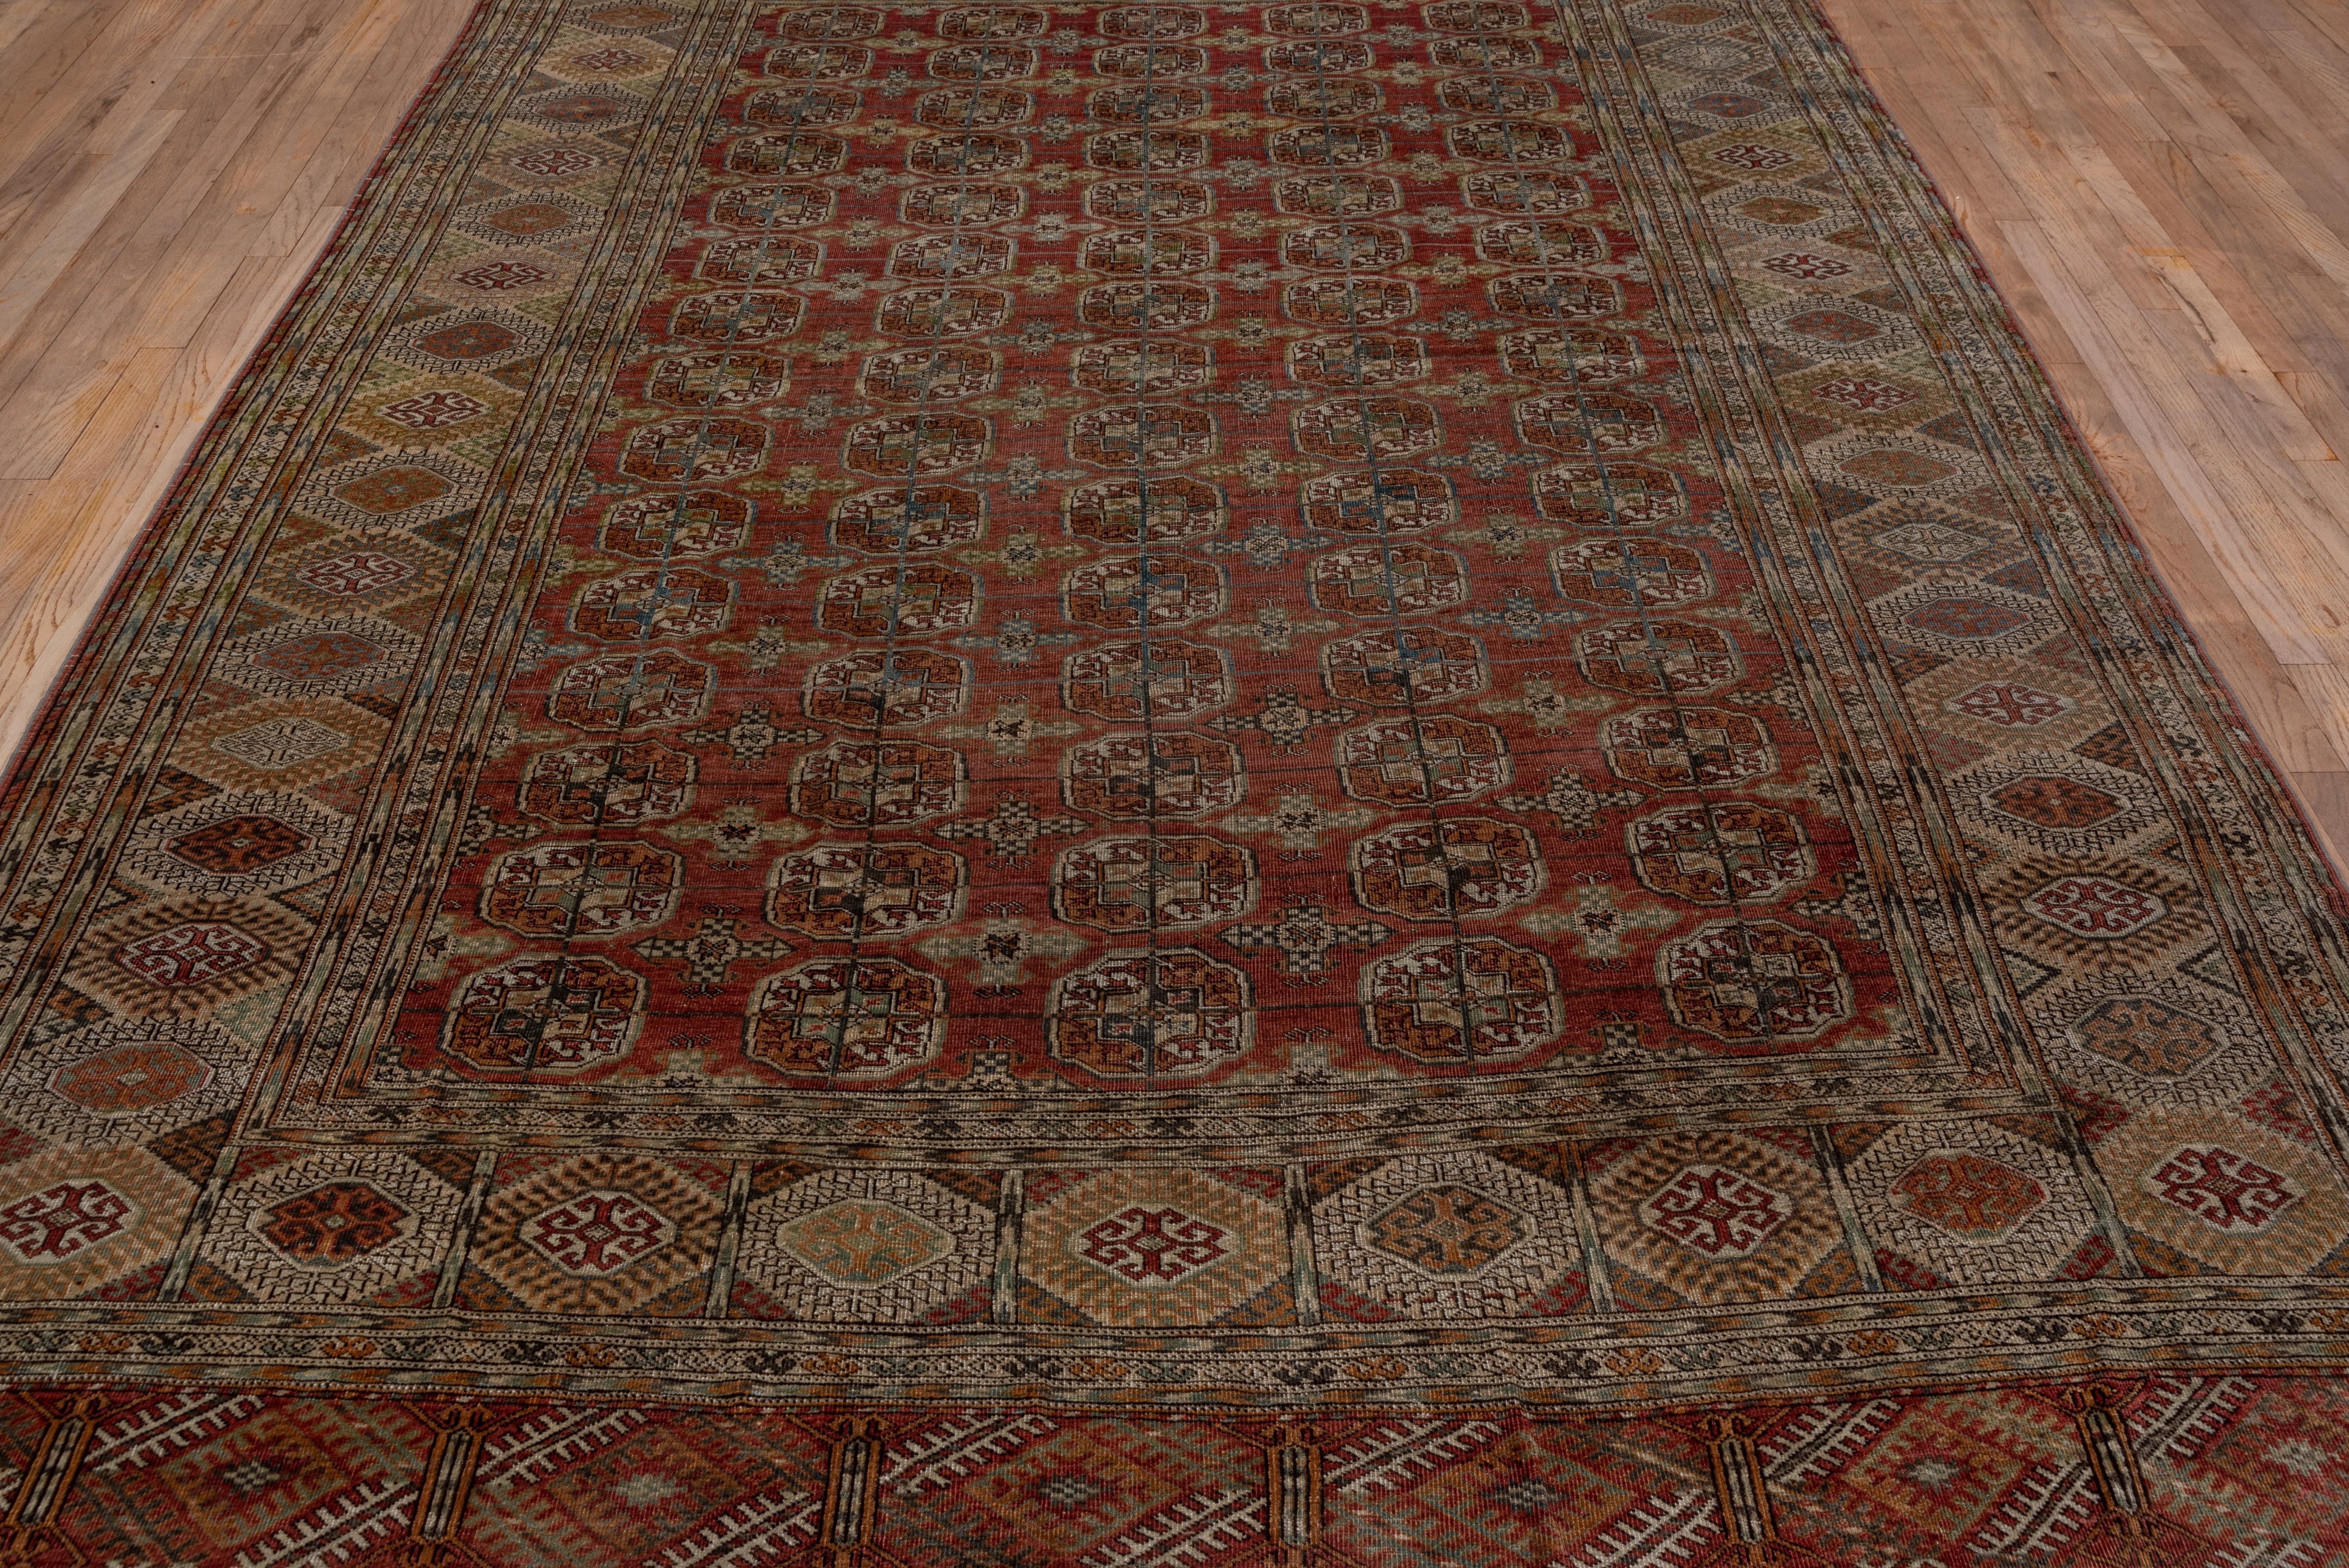 turkoman rugs characteristics